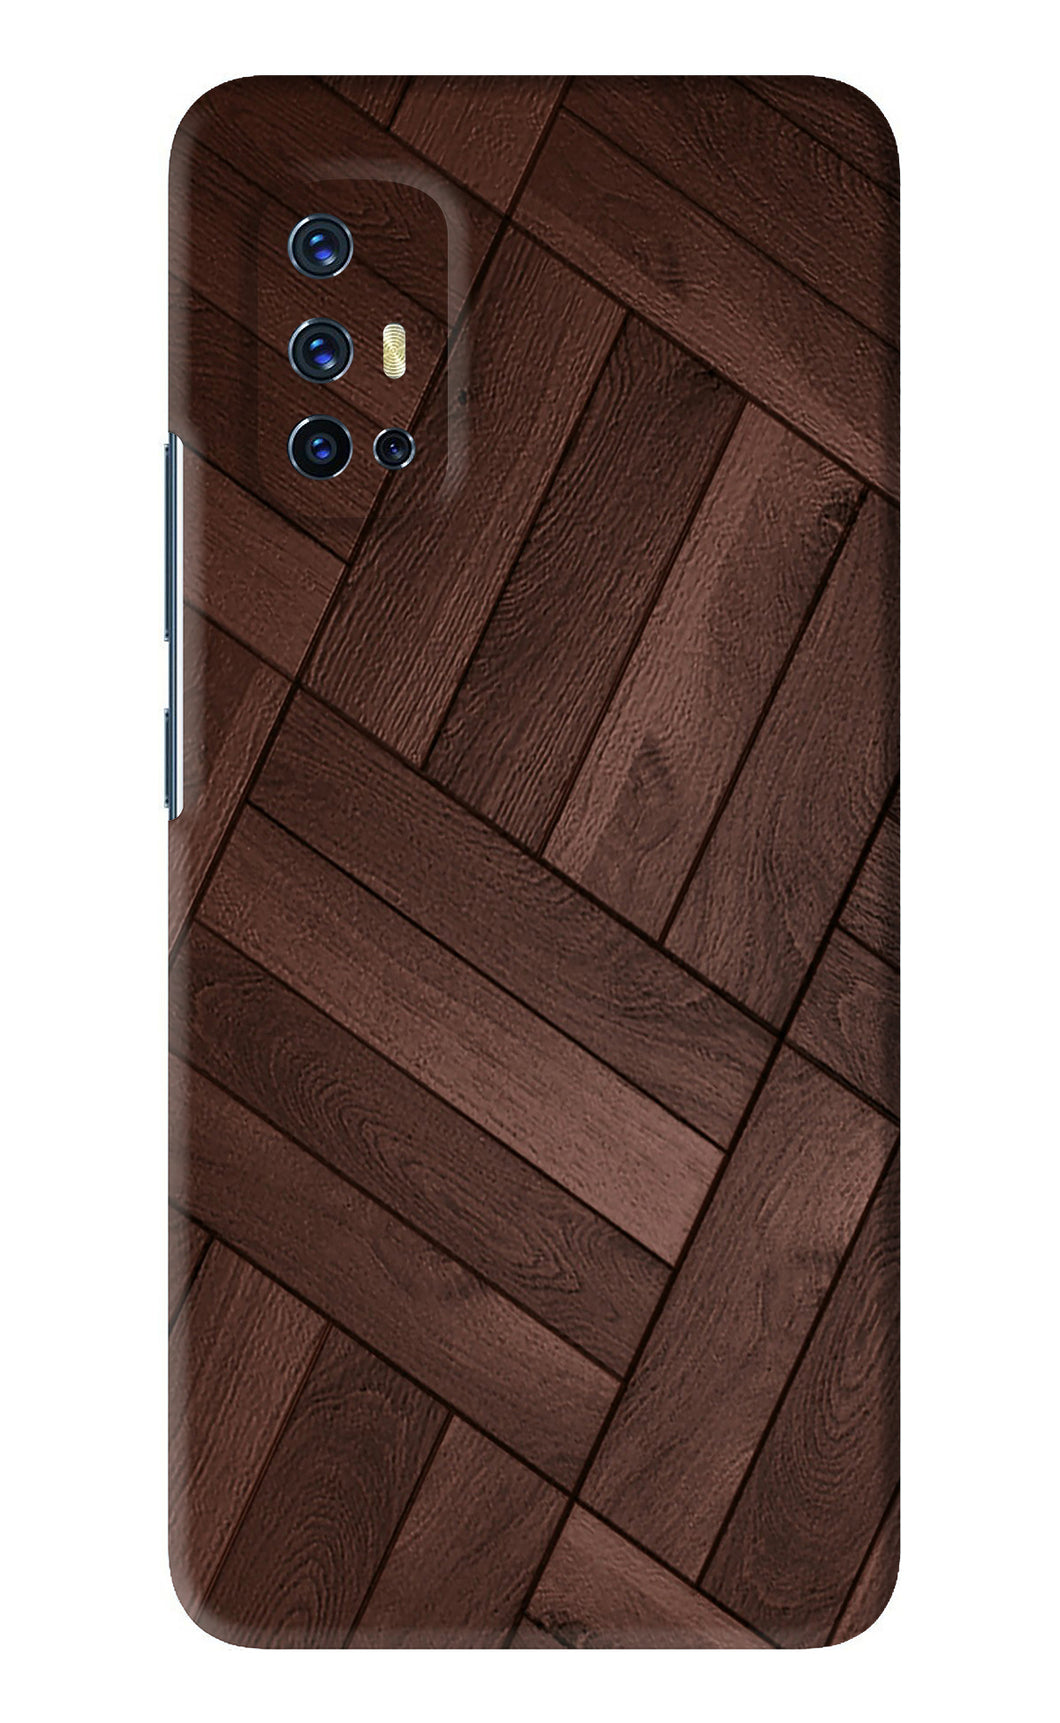 Wooden Texture Design Vivo V17 Back Skin Wrap